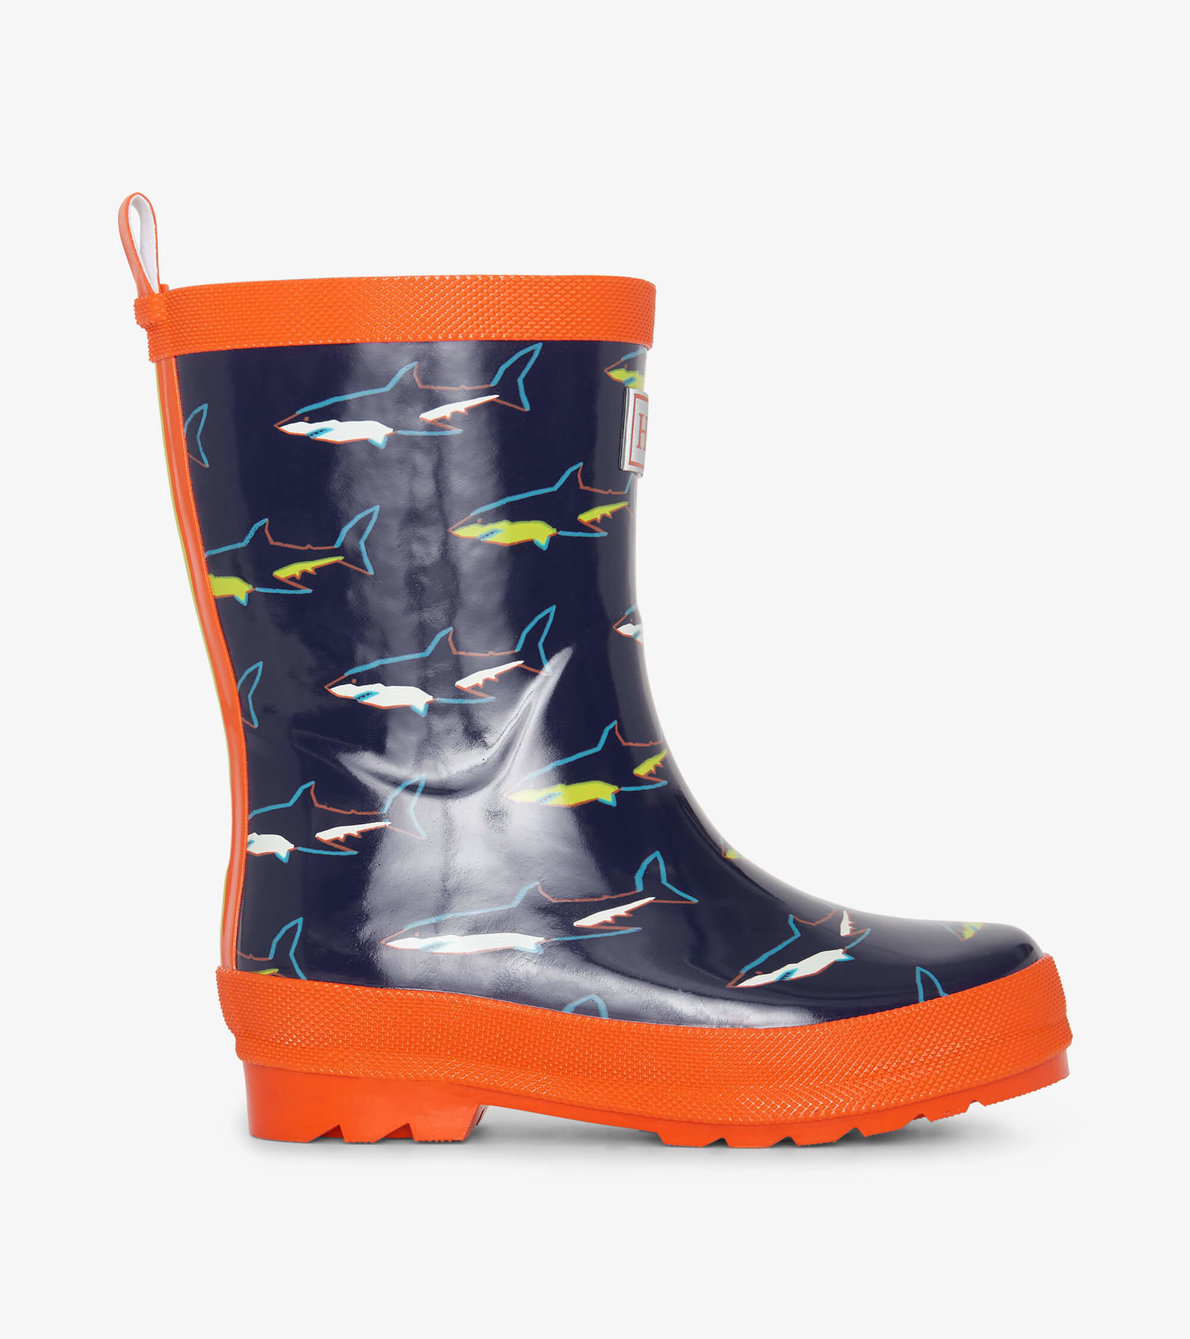 View larger image of Boys Shark Shiny Rain Boots